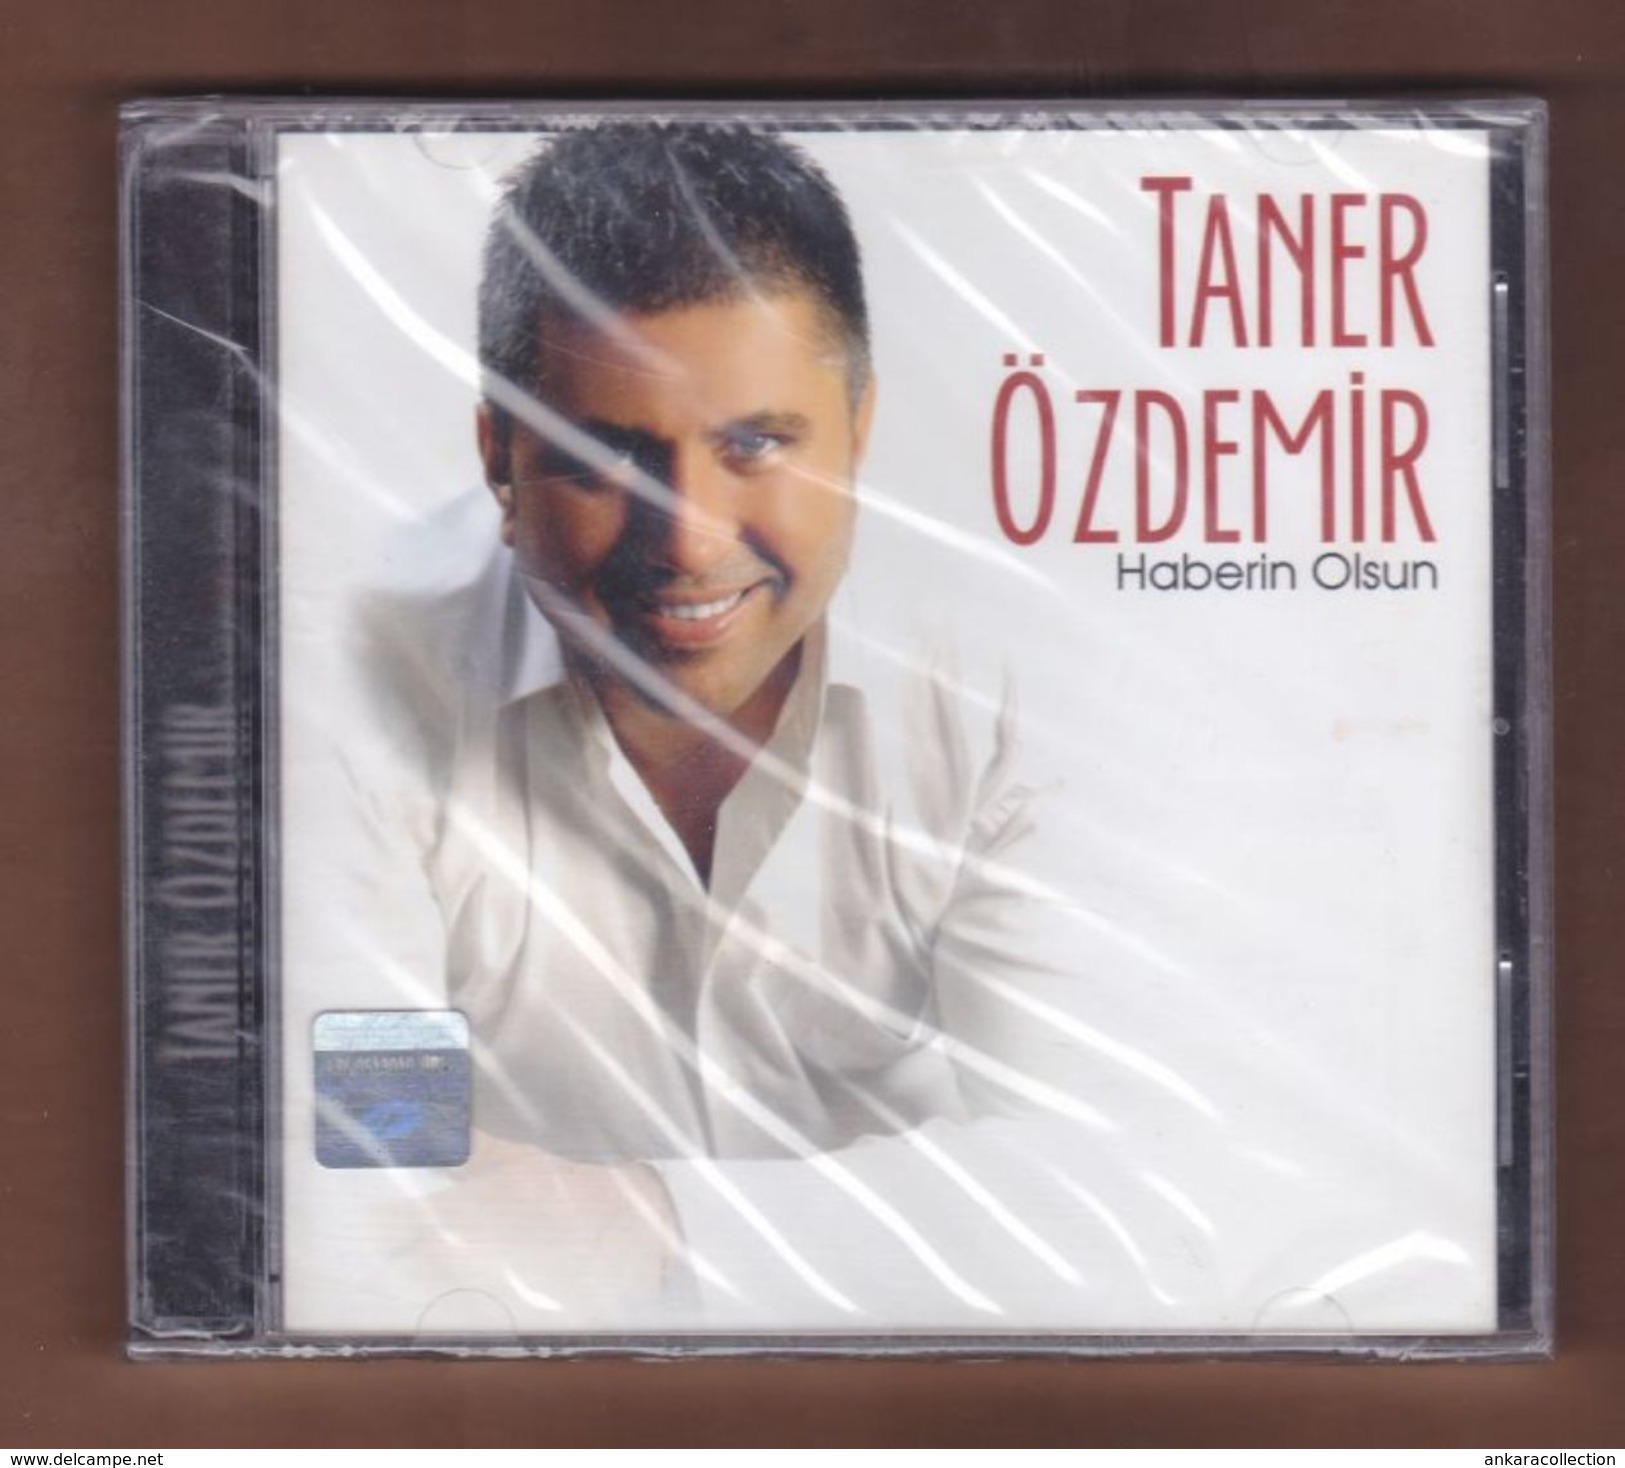 AC -  Taner özdemir Haberin Olsun BRAND NEW TURKISH MUSIC CD - World Music